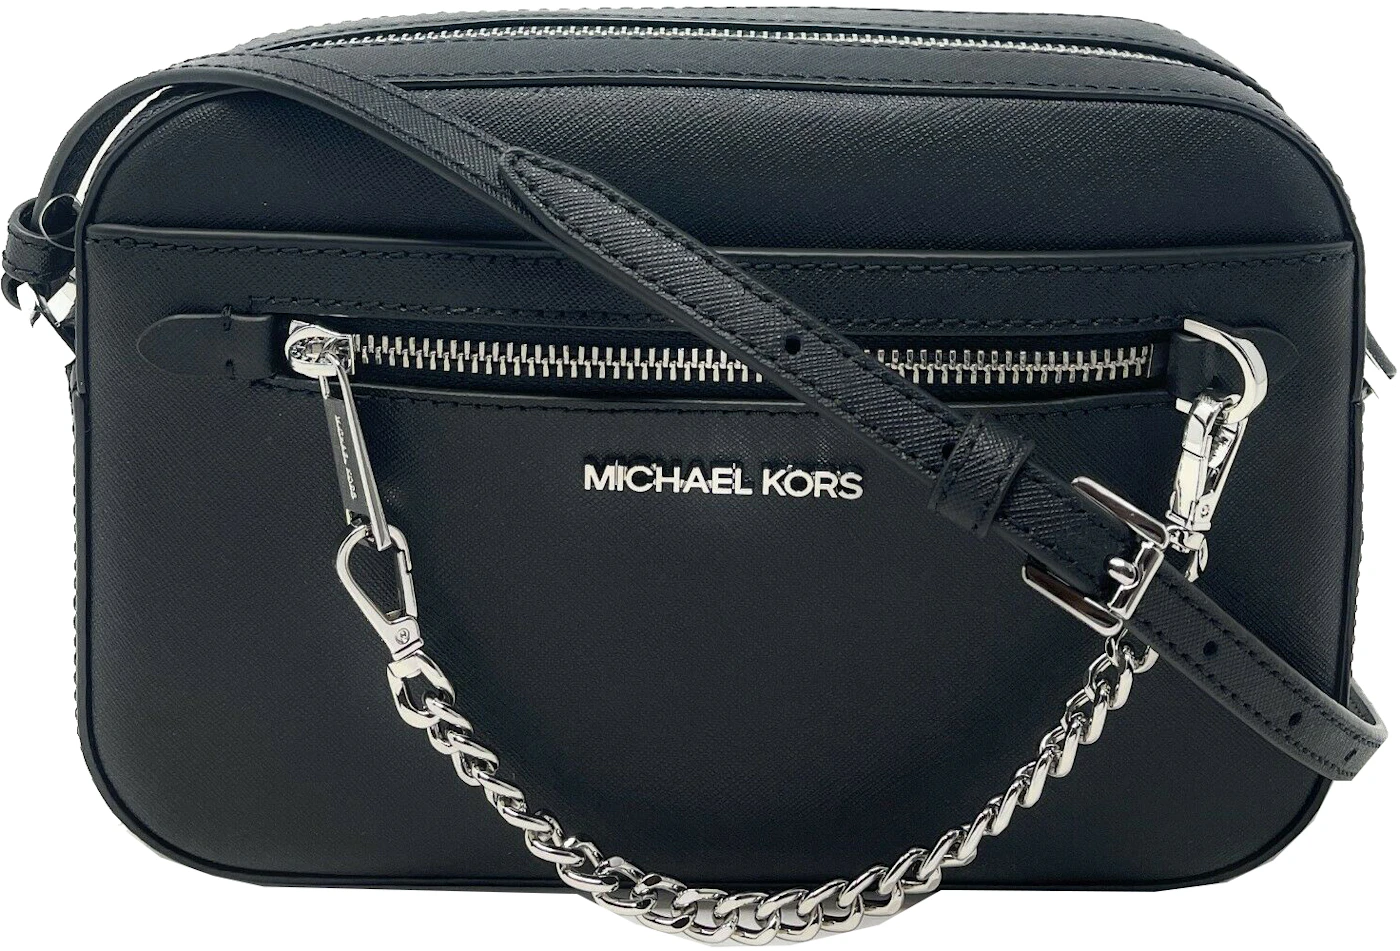 Michael Kors Jet Set Zip Chain Crossbody Bag Large Black/Silver in ...